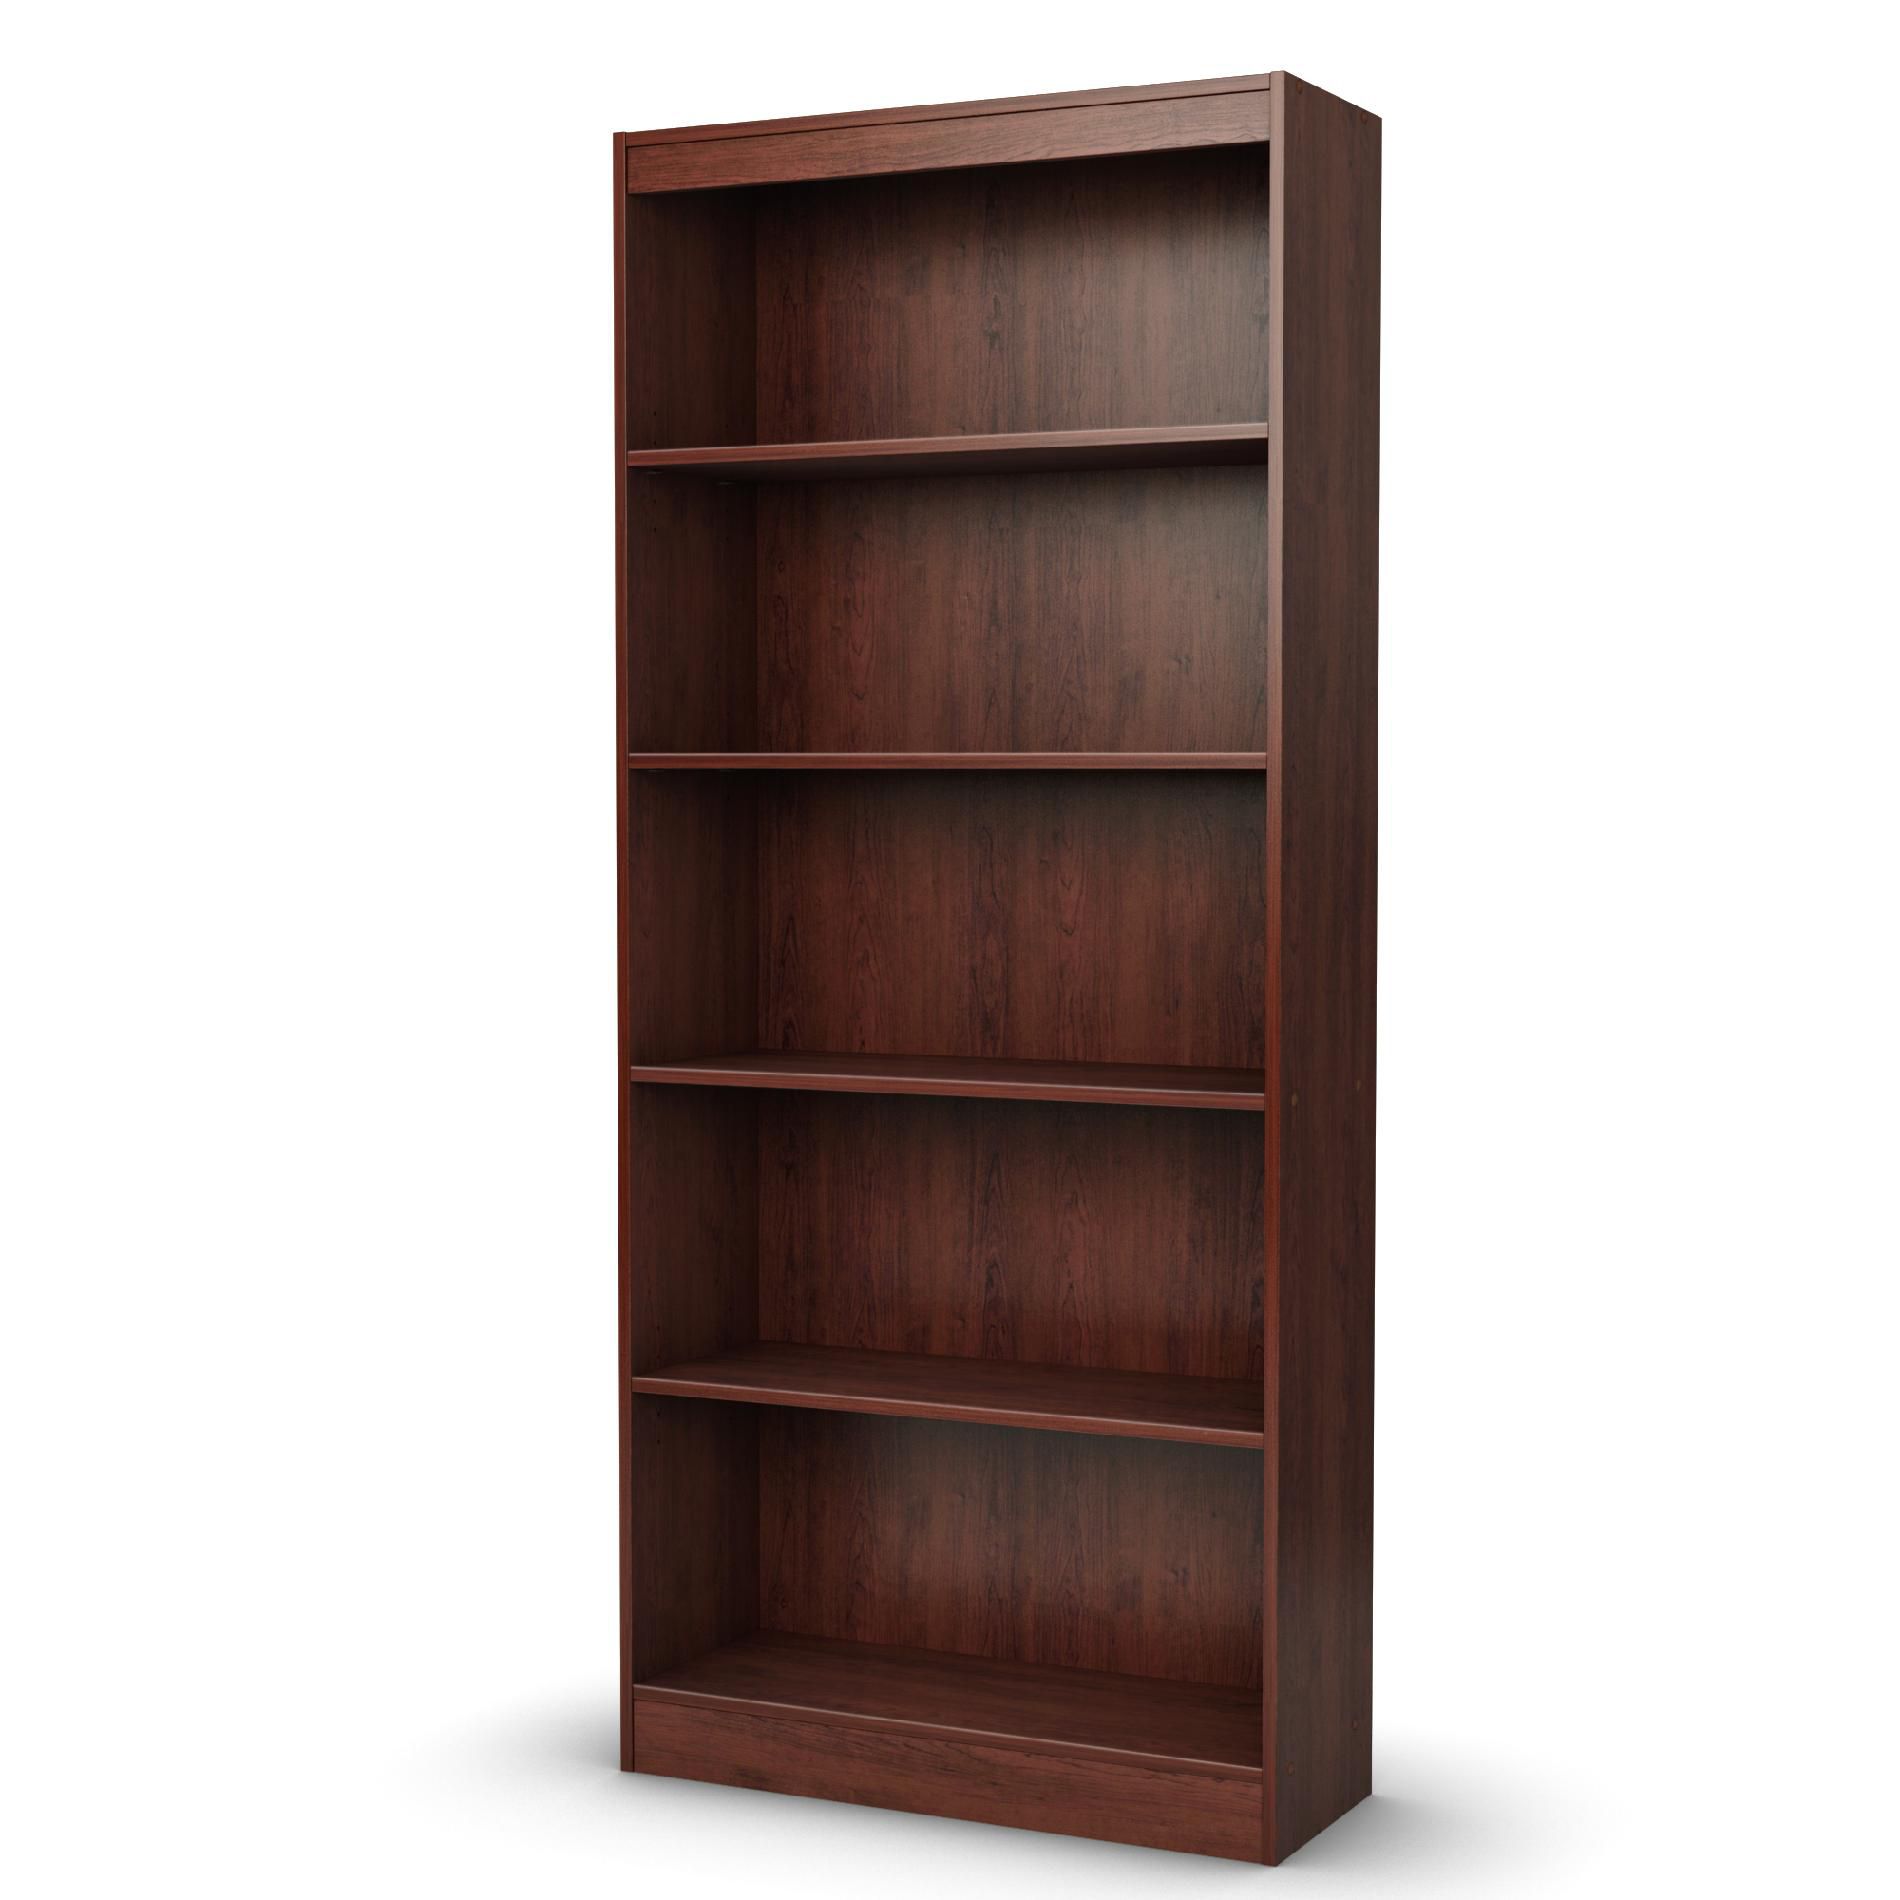 Sauder - 51200-000 - Beginnings 5 Shelf Wood Bookcase, Cinnamon Cherry ...